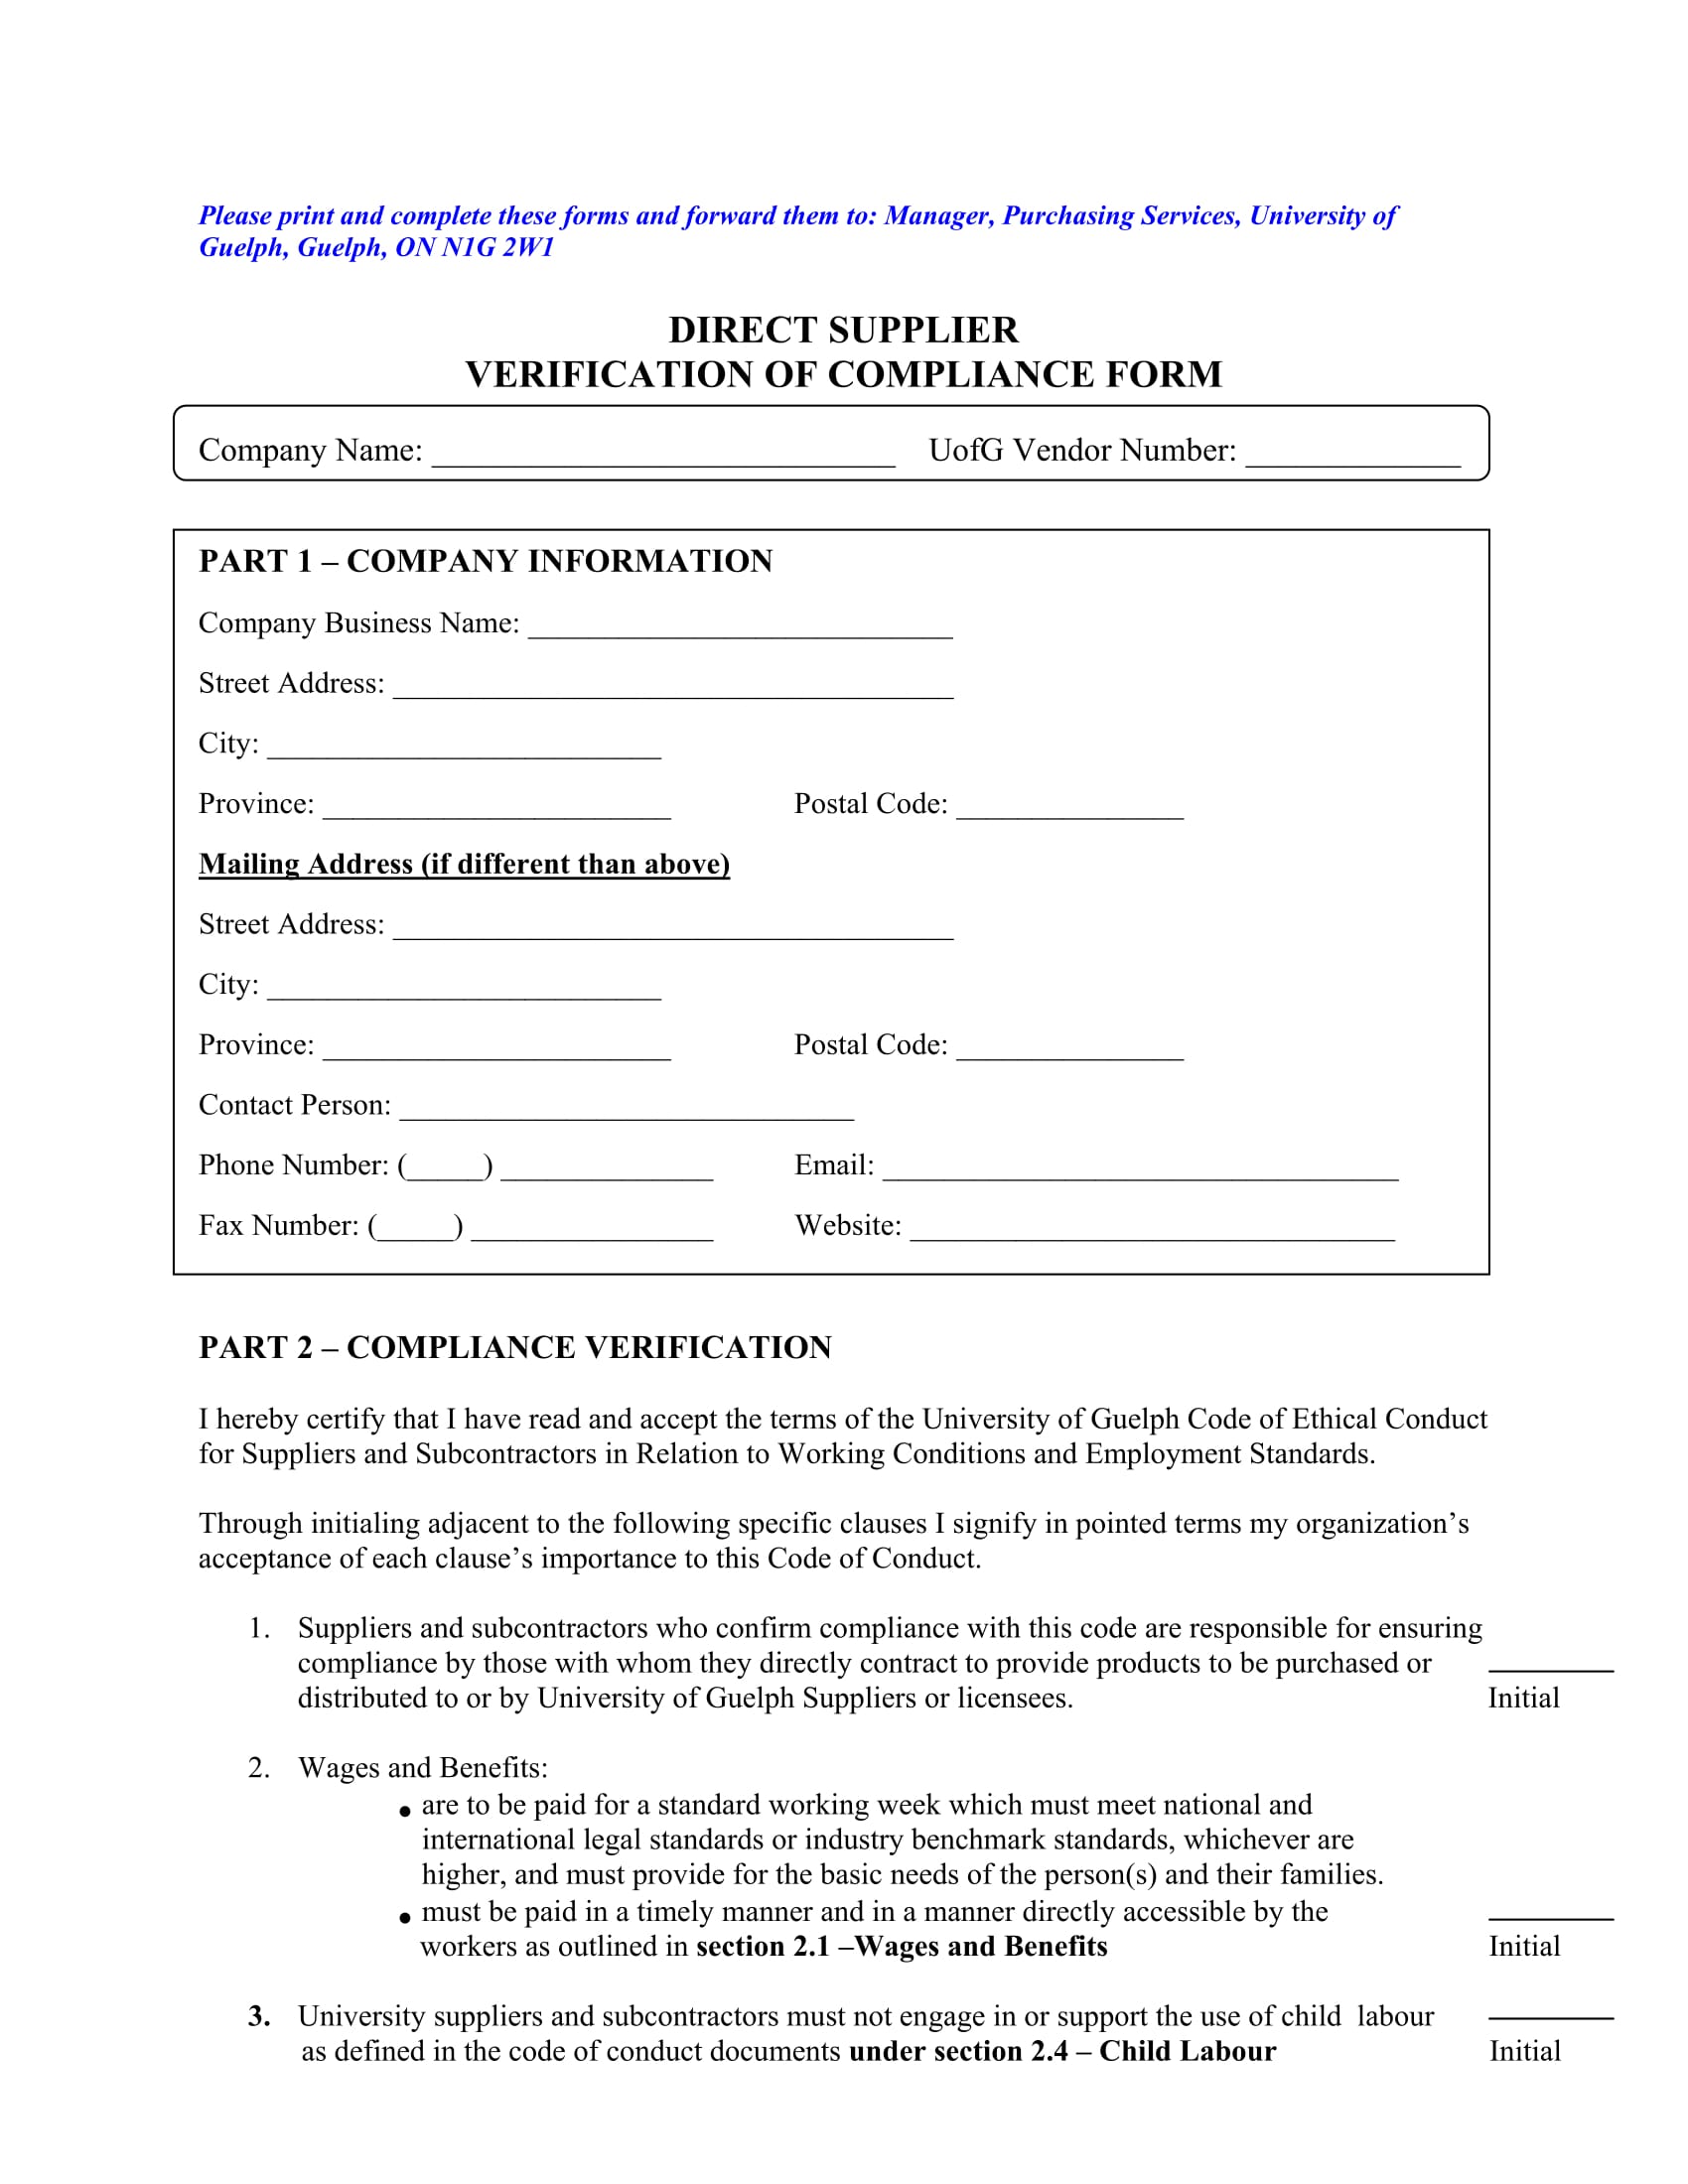 direct supplier compliance verification form 1